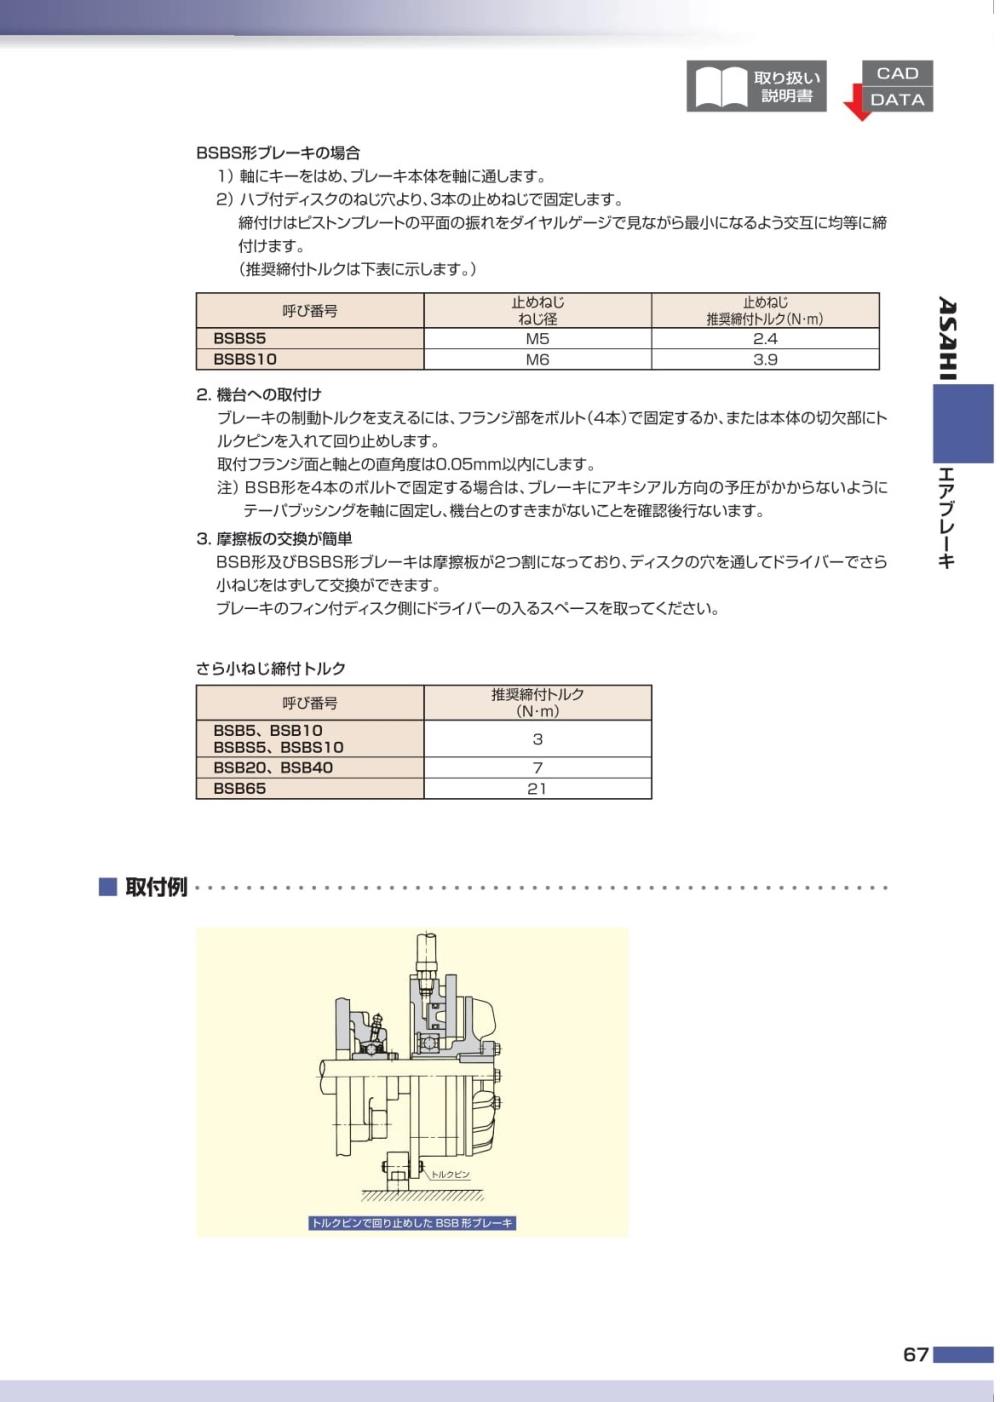 NEXEN-ASAHI Air Brake BSBS Series